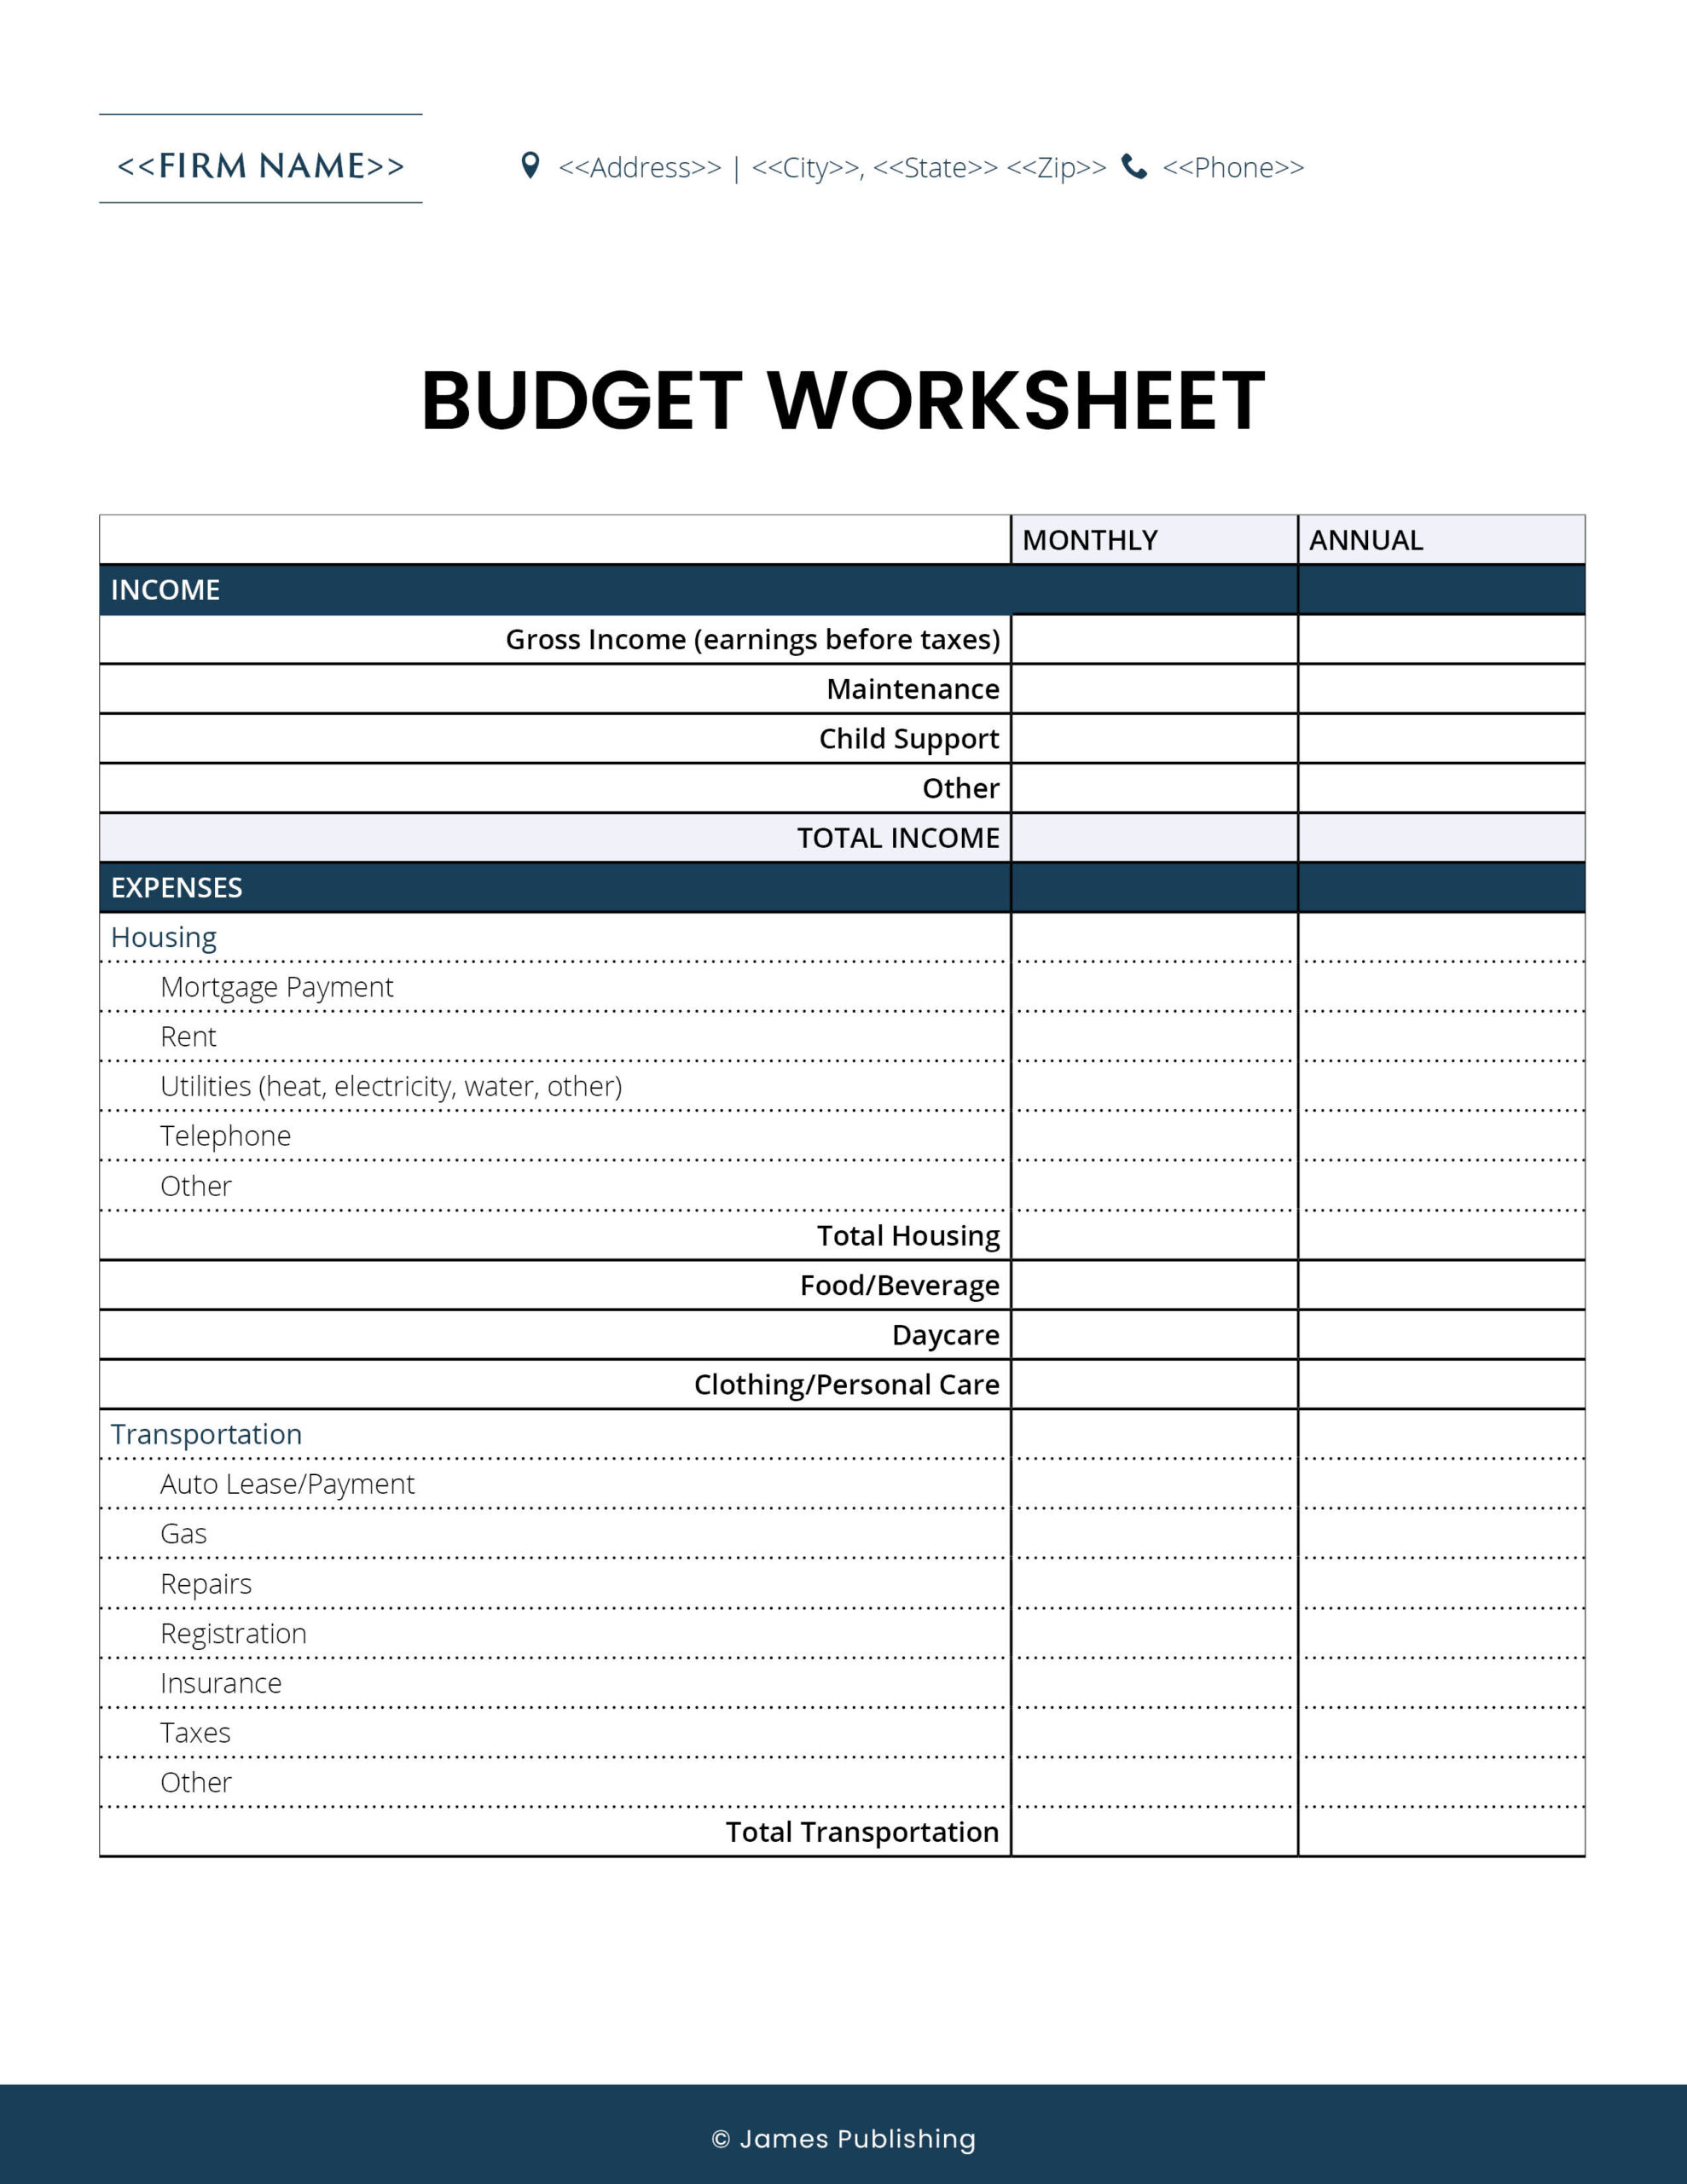 FAM-25 Budget Worksheet